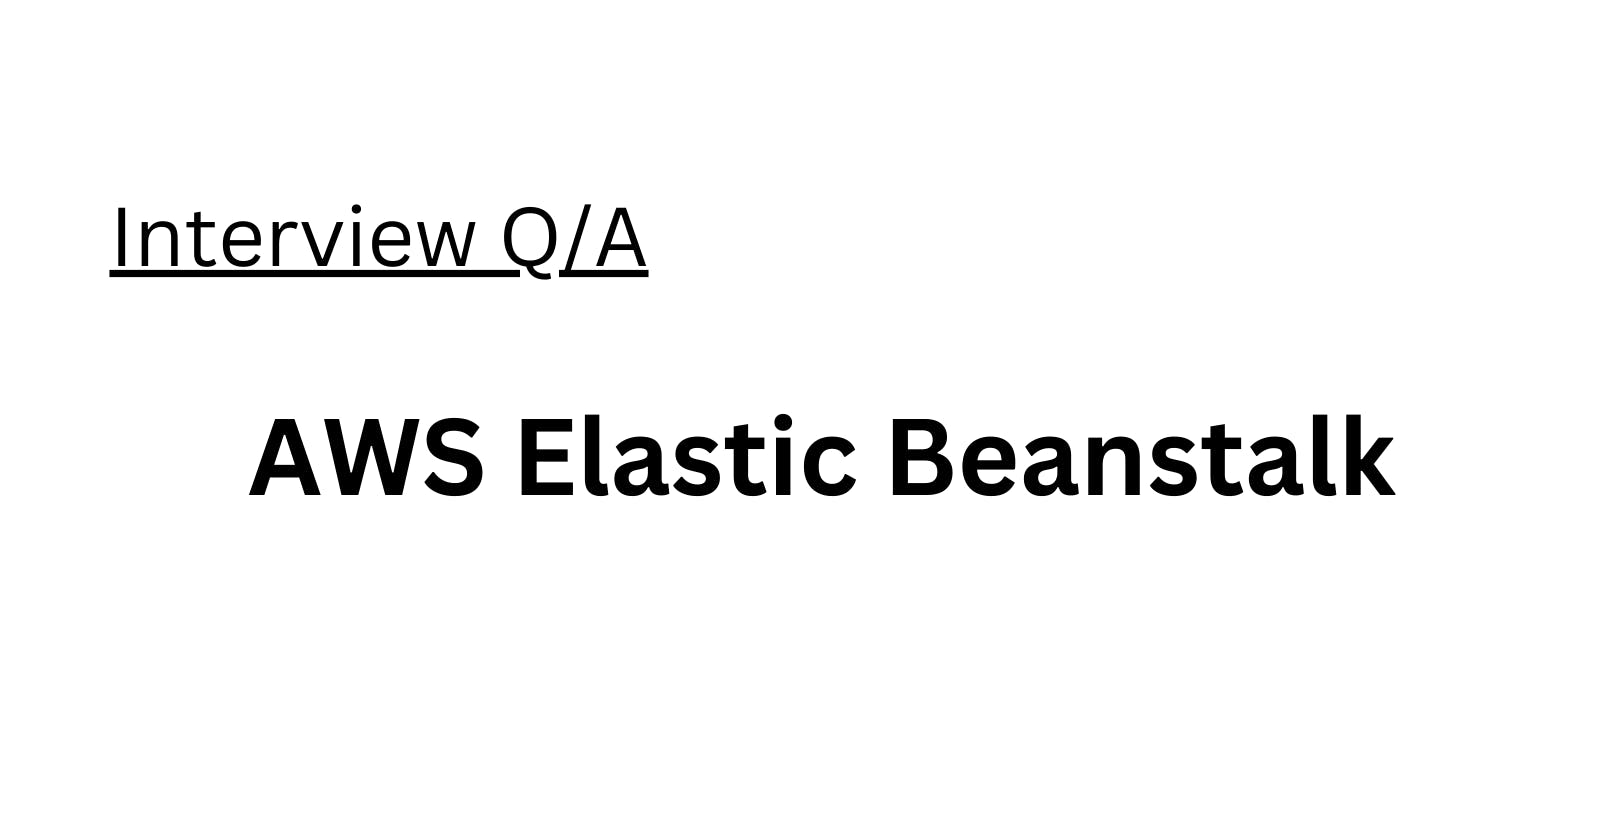 AWS Elastic Beanstalk Interview Q/A